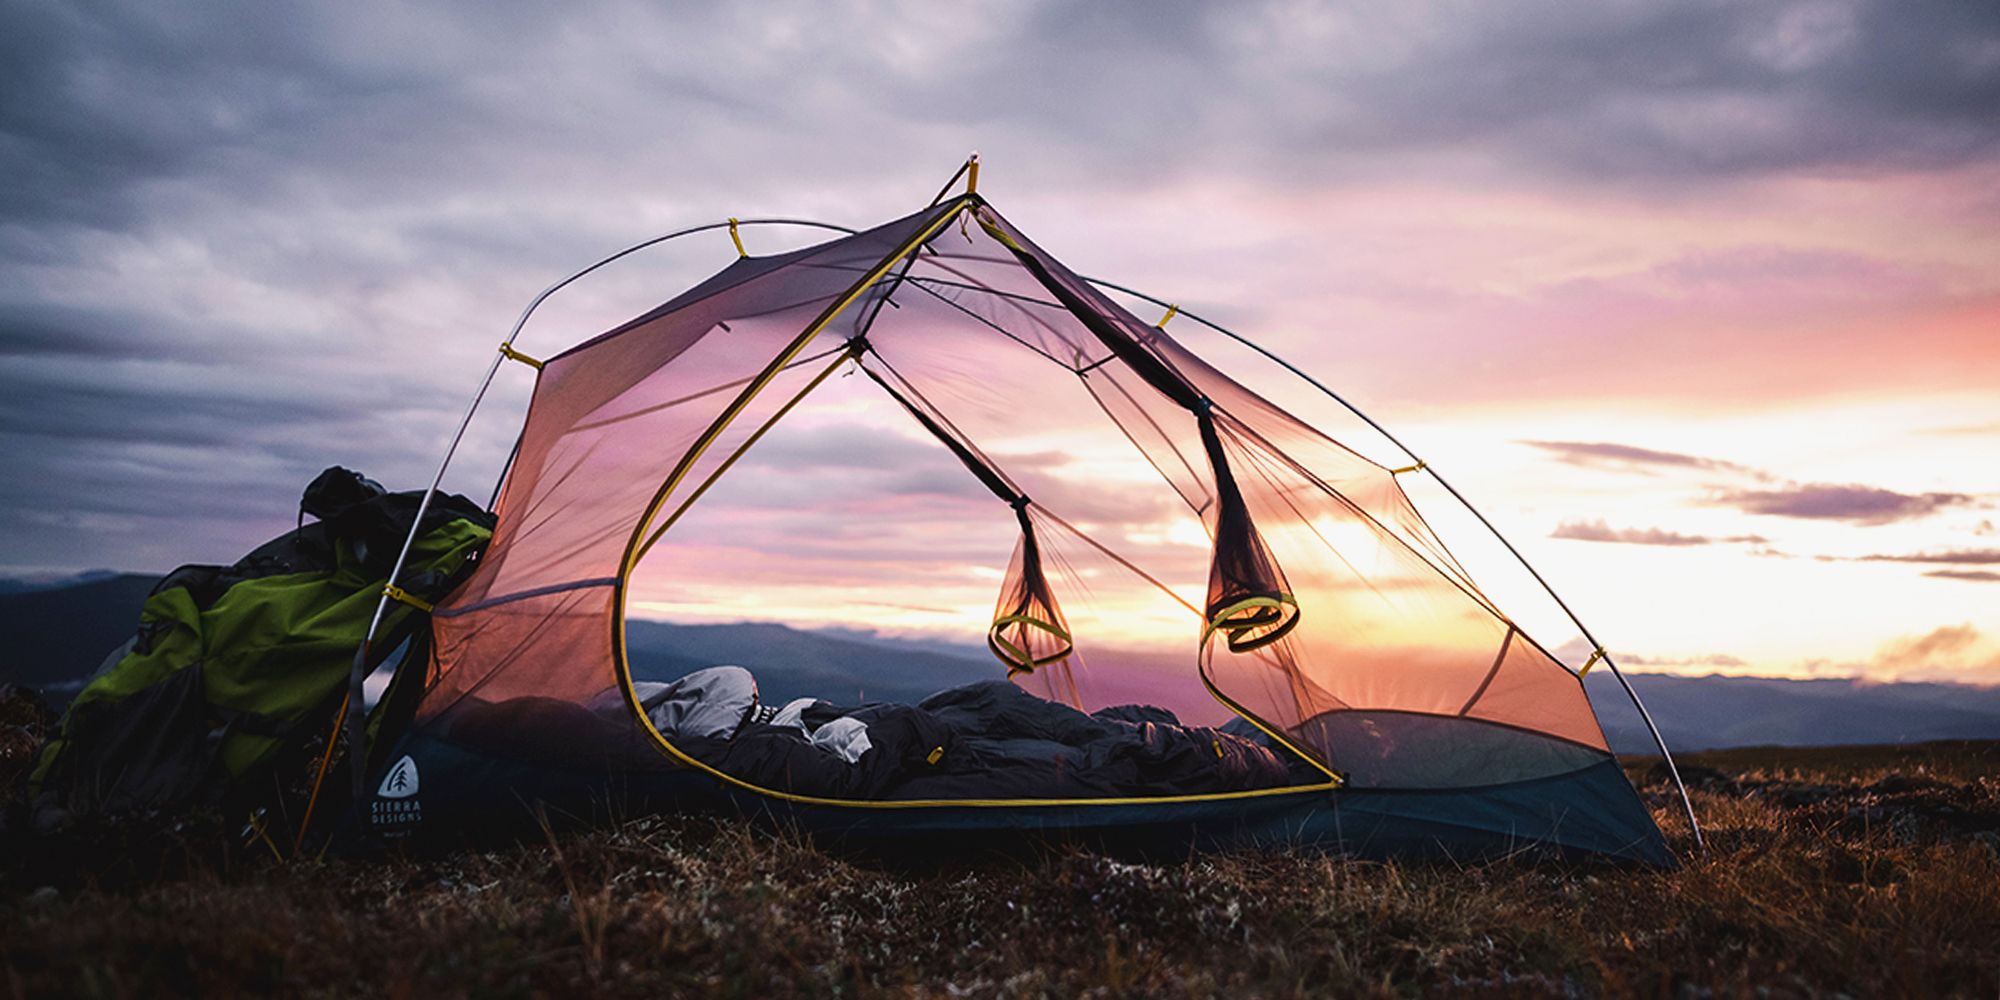 https://hips.hearstapps.com/hmg-prod/images/camping-tents-1522162073.jpg